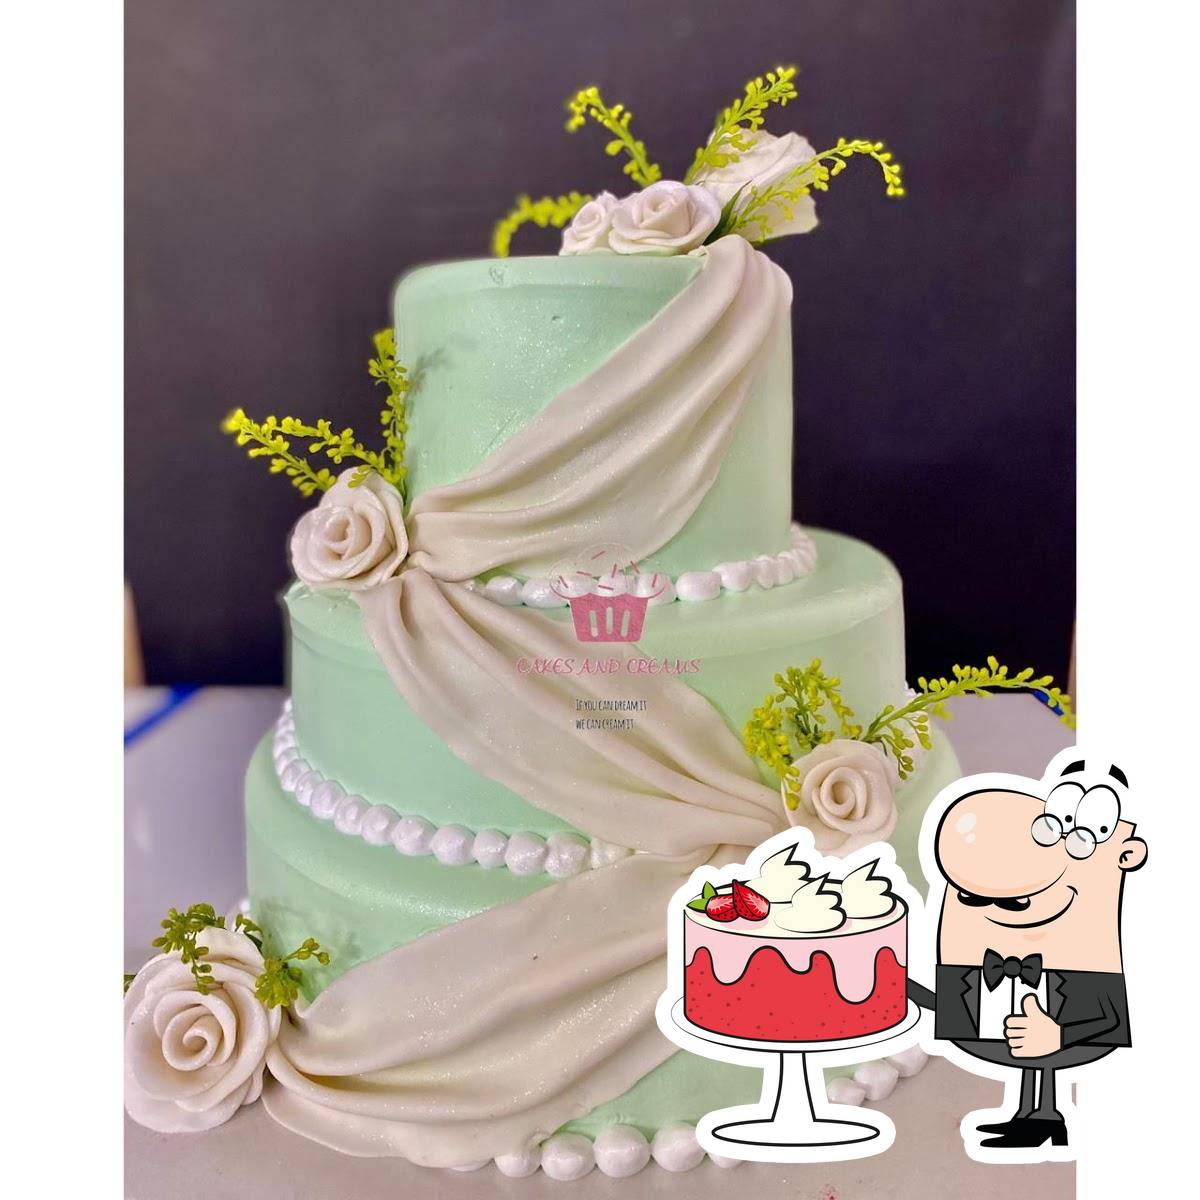 rcdb cake Cakes and creams 2021 09 8